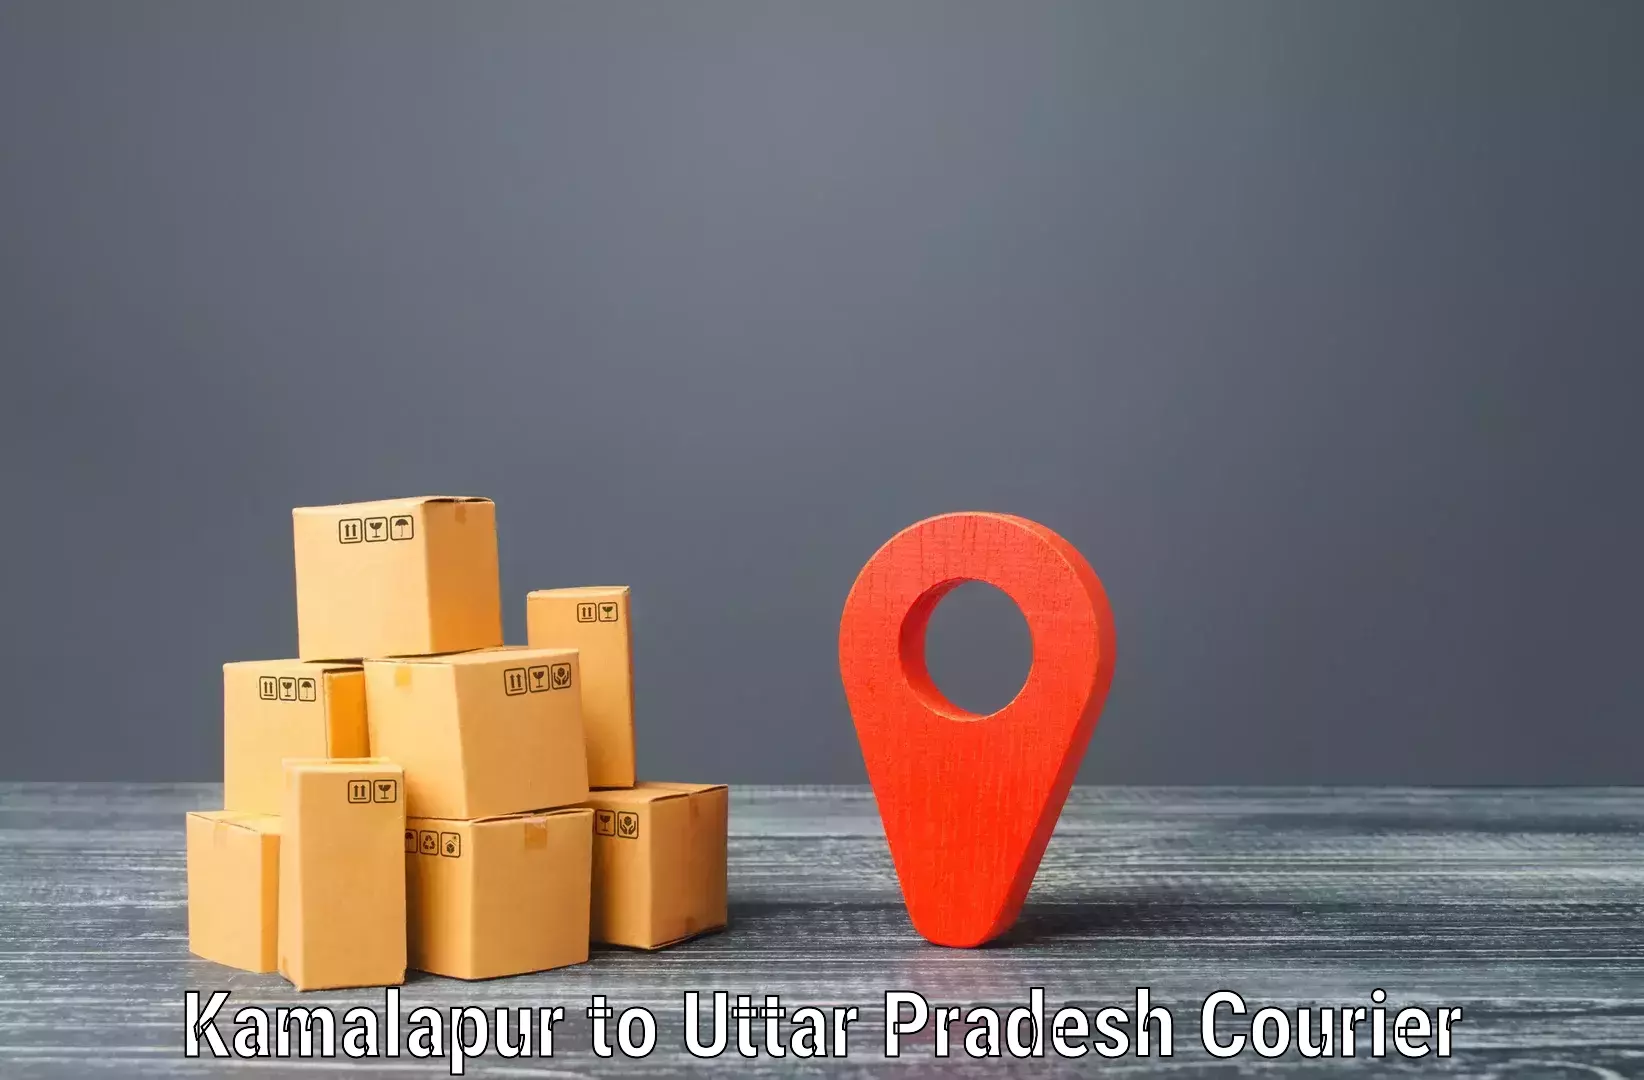 Nationwide parcel services Kamalapur to Kanth